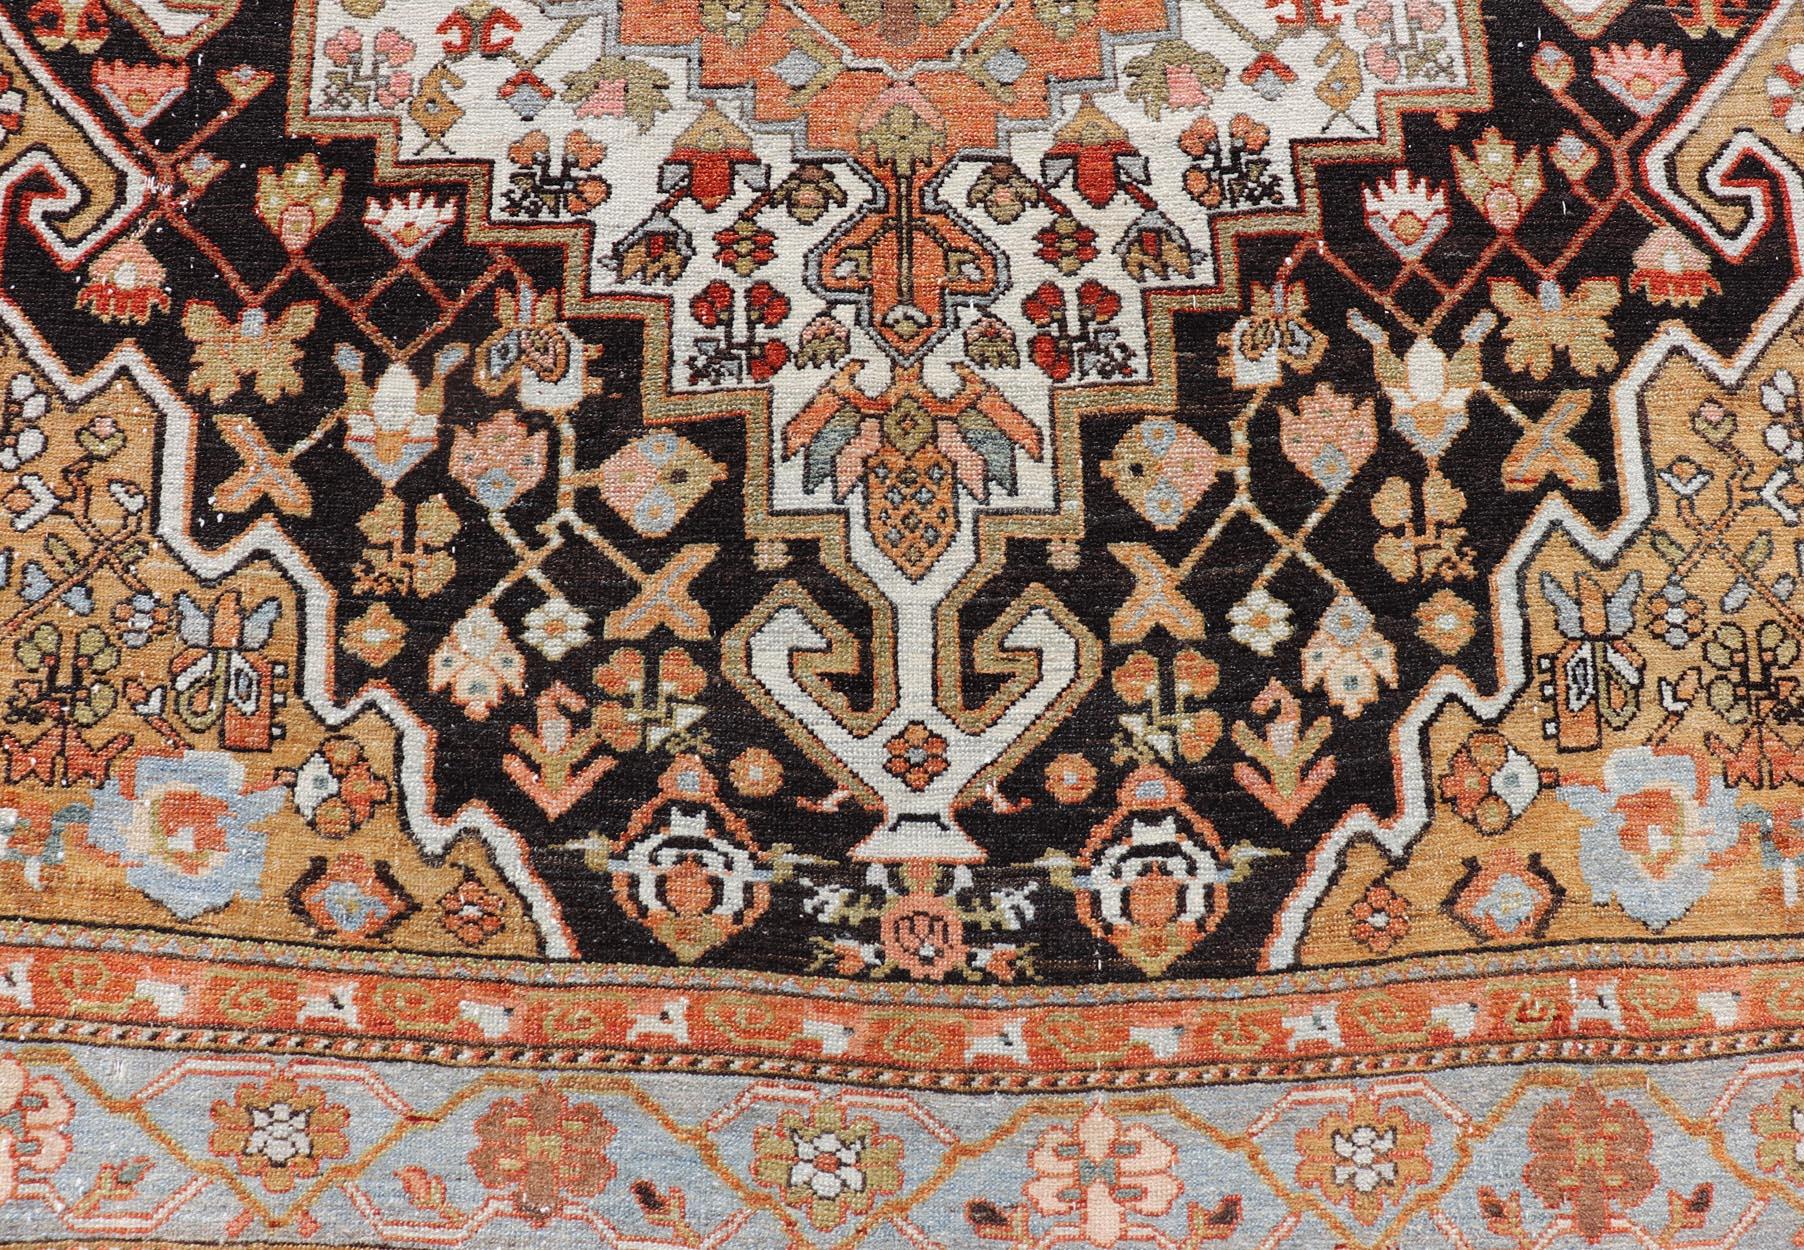 Antique Persian Tribal Design Bakhtiari Rug in Multi Colors Keivan Woven Arts. 
Keivan Woven Arts / rug W22-0202, country of origin / type: Iran / Bakhtiari, circa 1900
Measures: 6'0 x 12'0 
Persian Bakhtiari rugs are in fact tribal pieces that rely